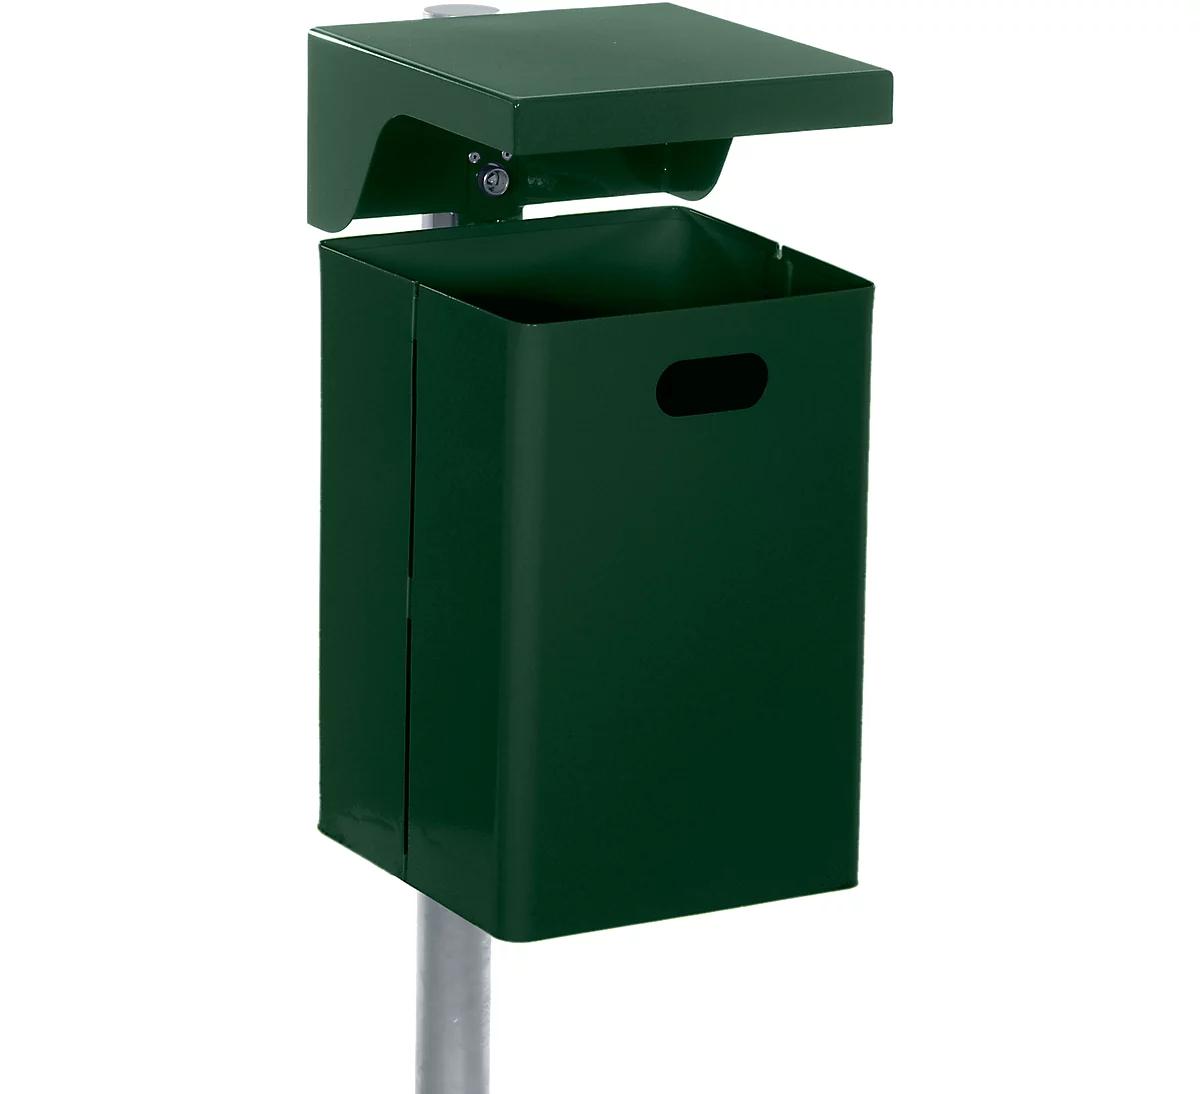 Abfallbehälter mit Haube, grün (RAL 6005)